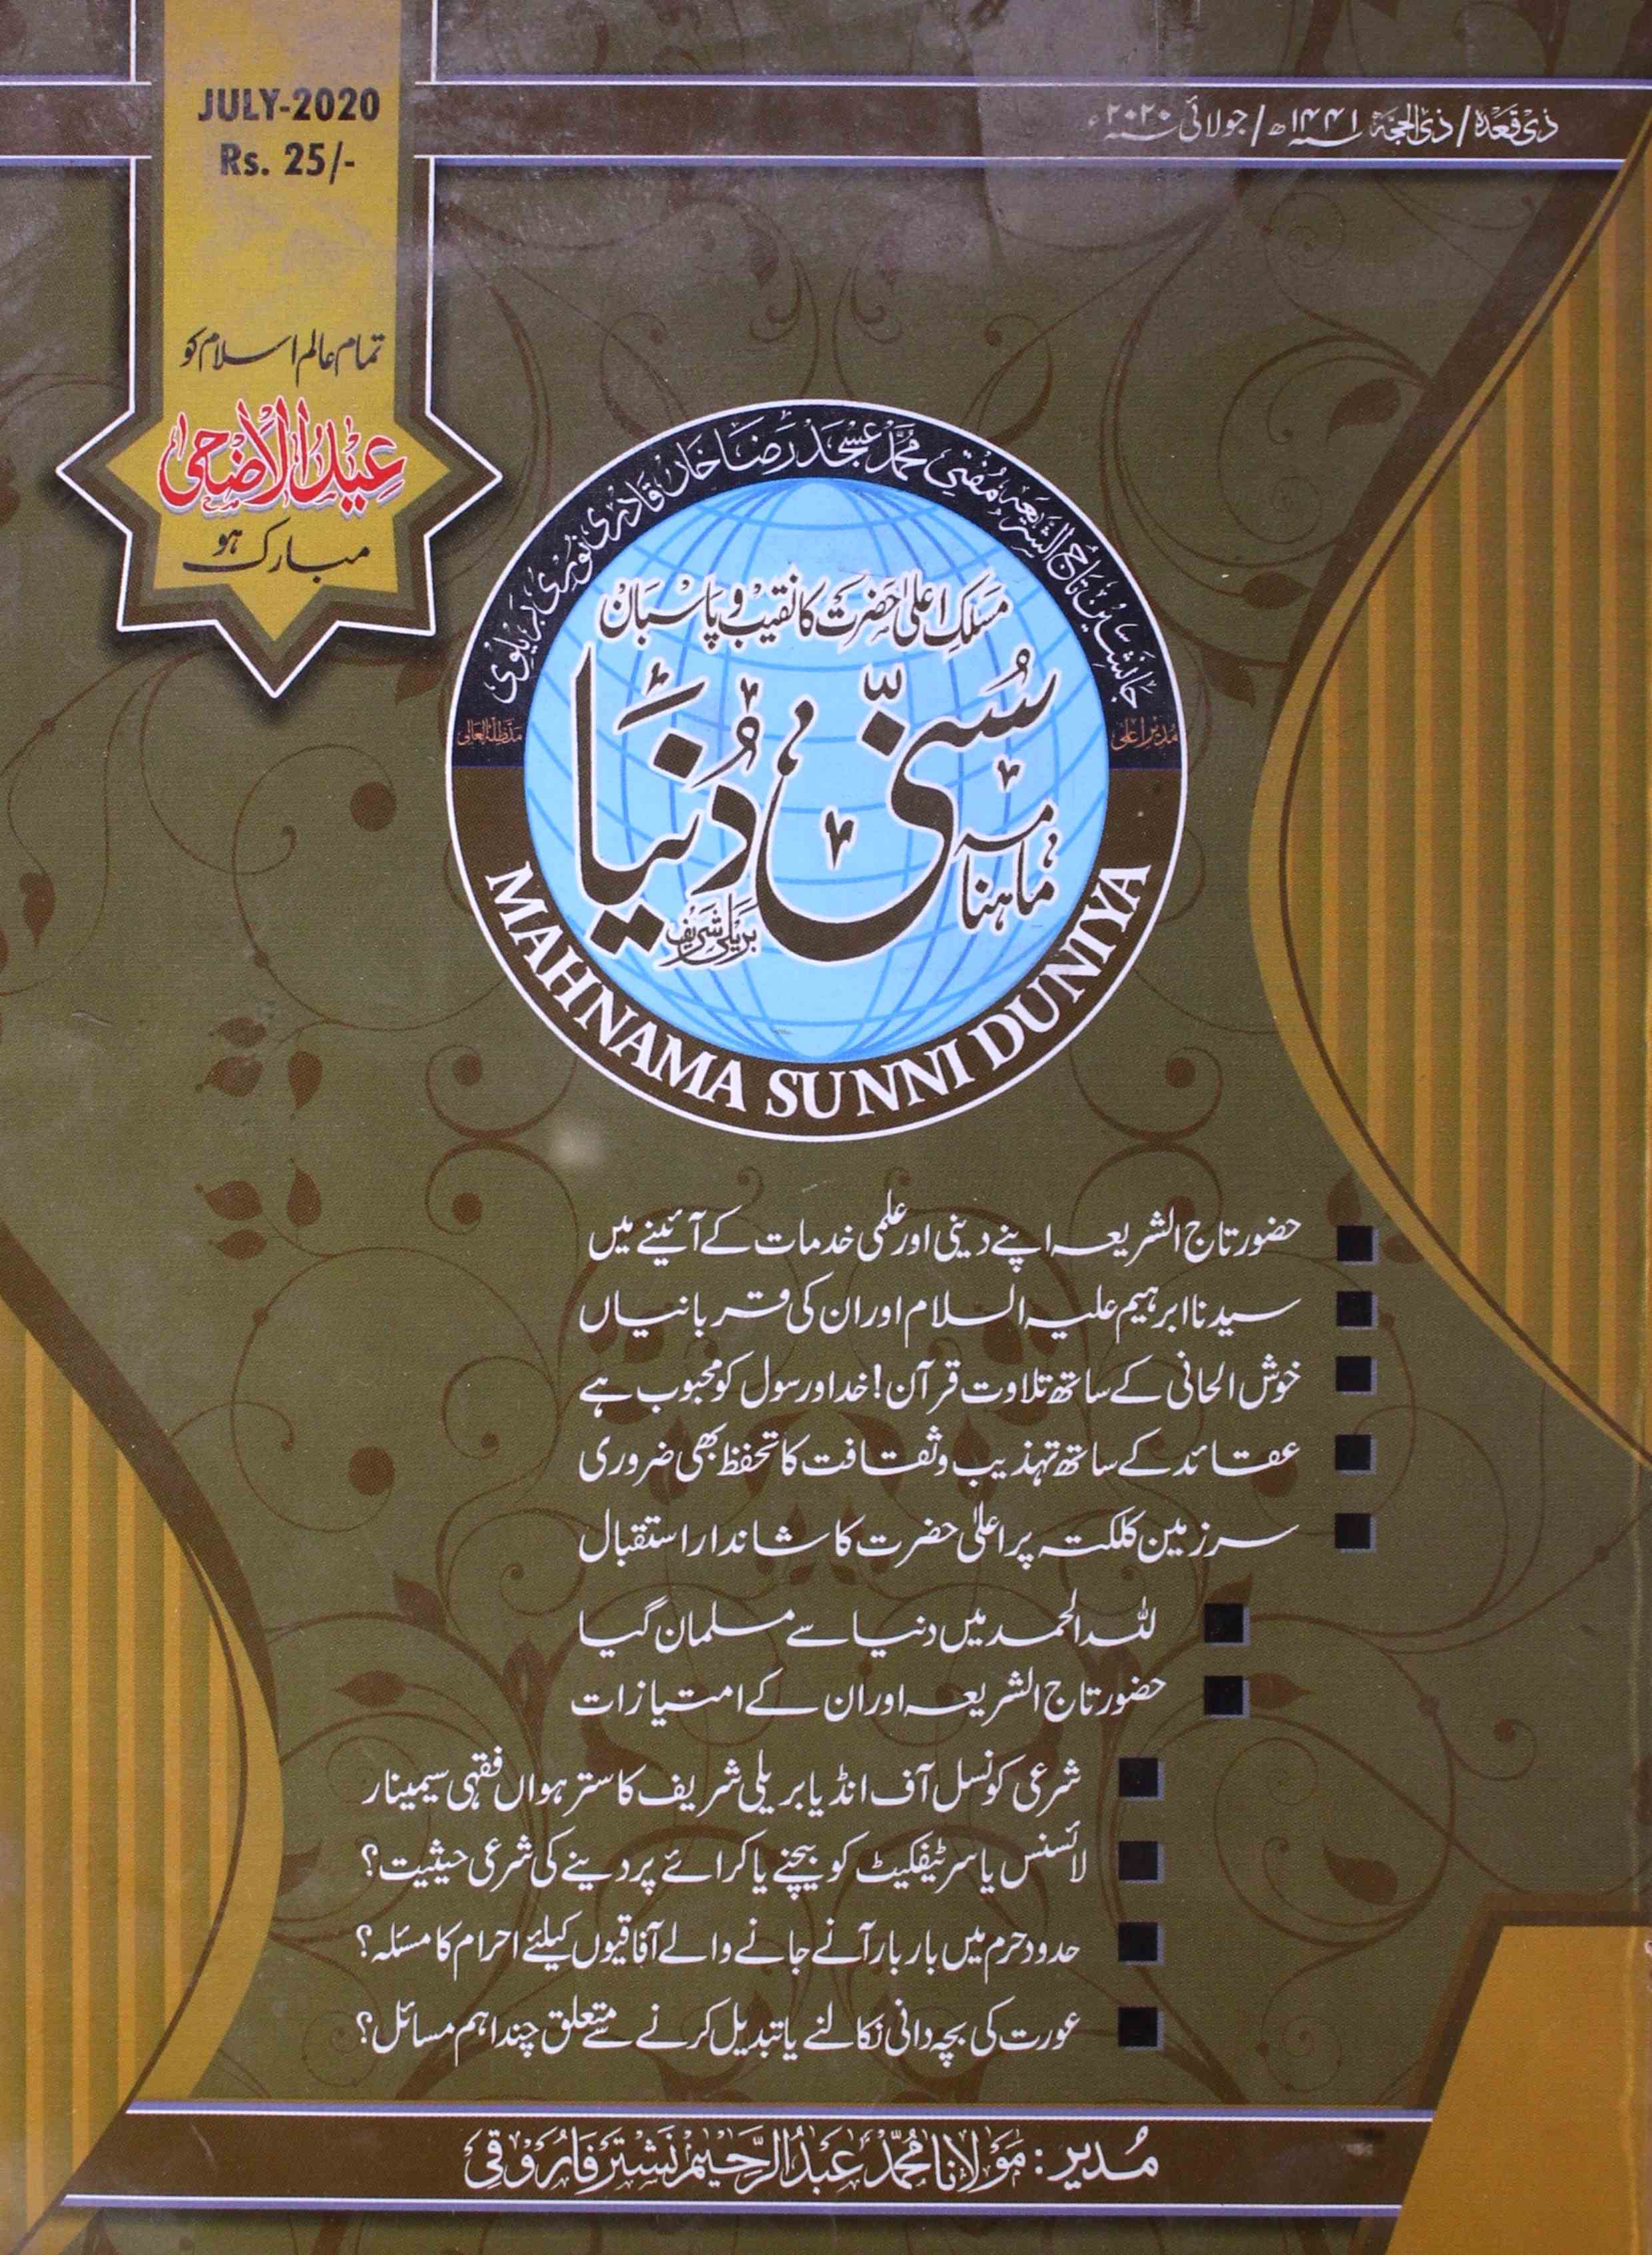 Mahnama Sunni Duniya Jild 5 Shumara 7-Shumara Number-007